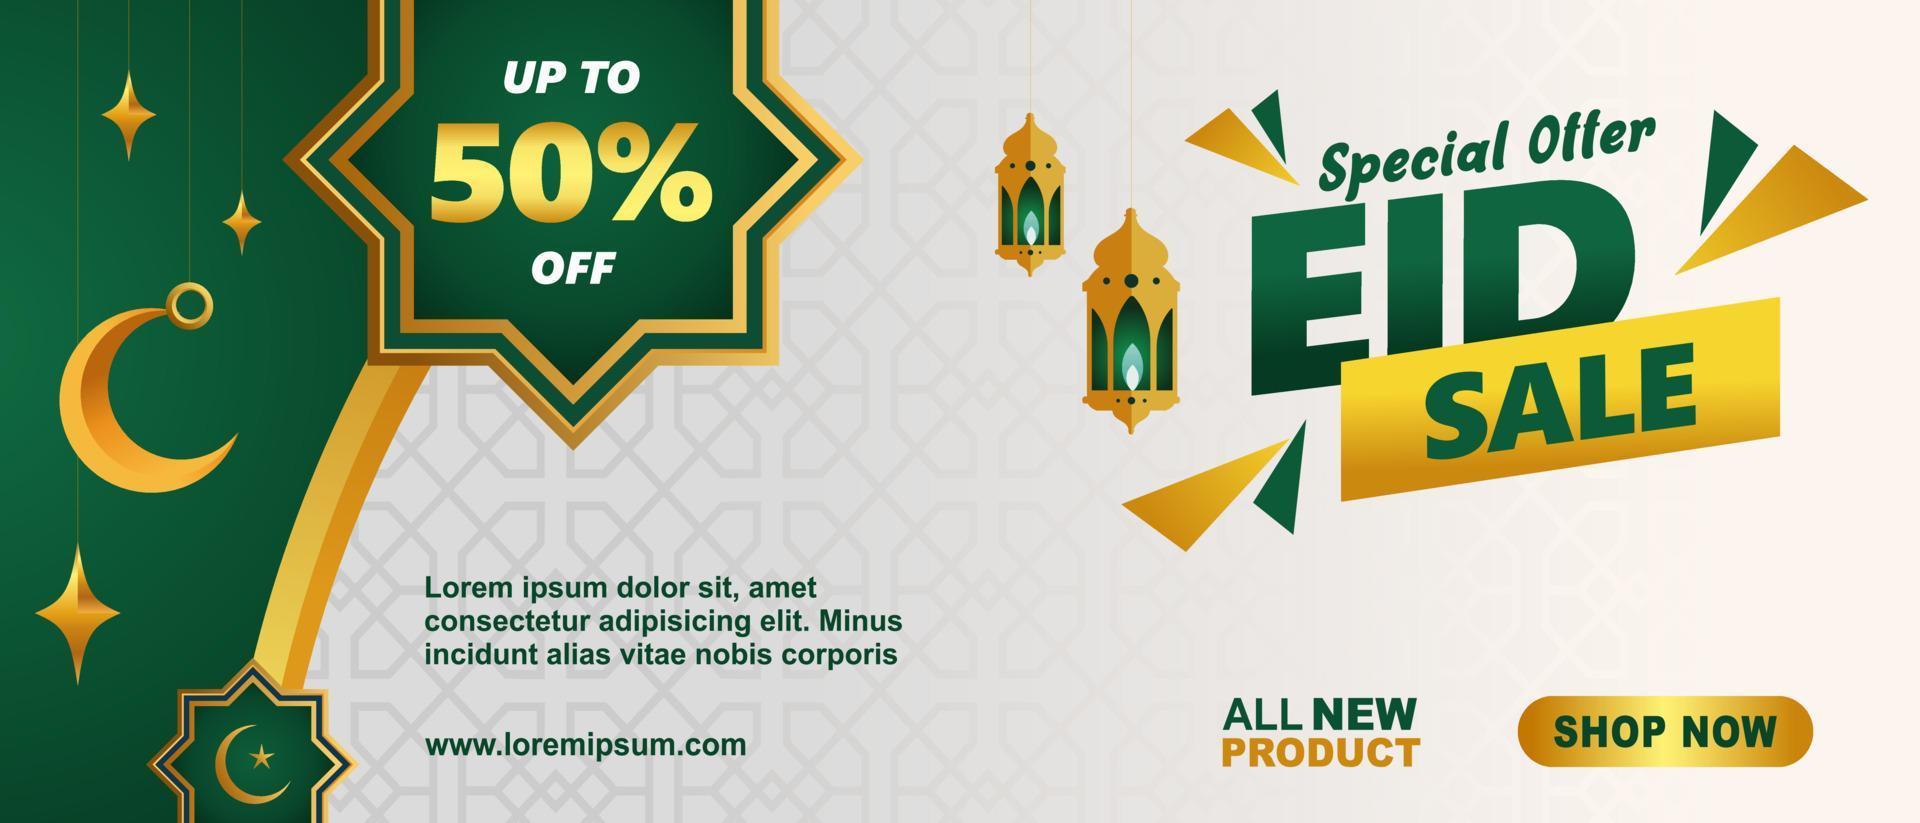 Eid Festival Offer Banner Design Template. Suitable for Web Header, Banner Design and Online Advertising. vector